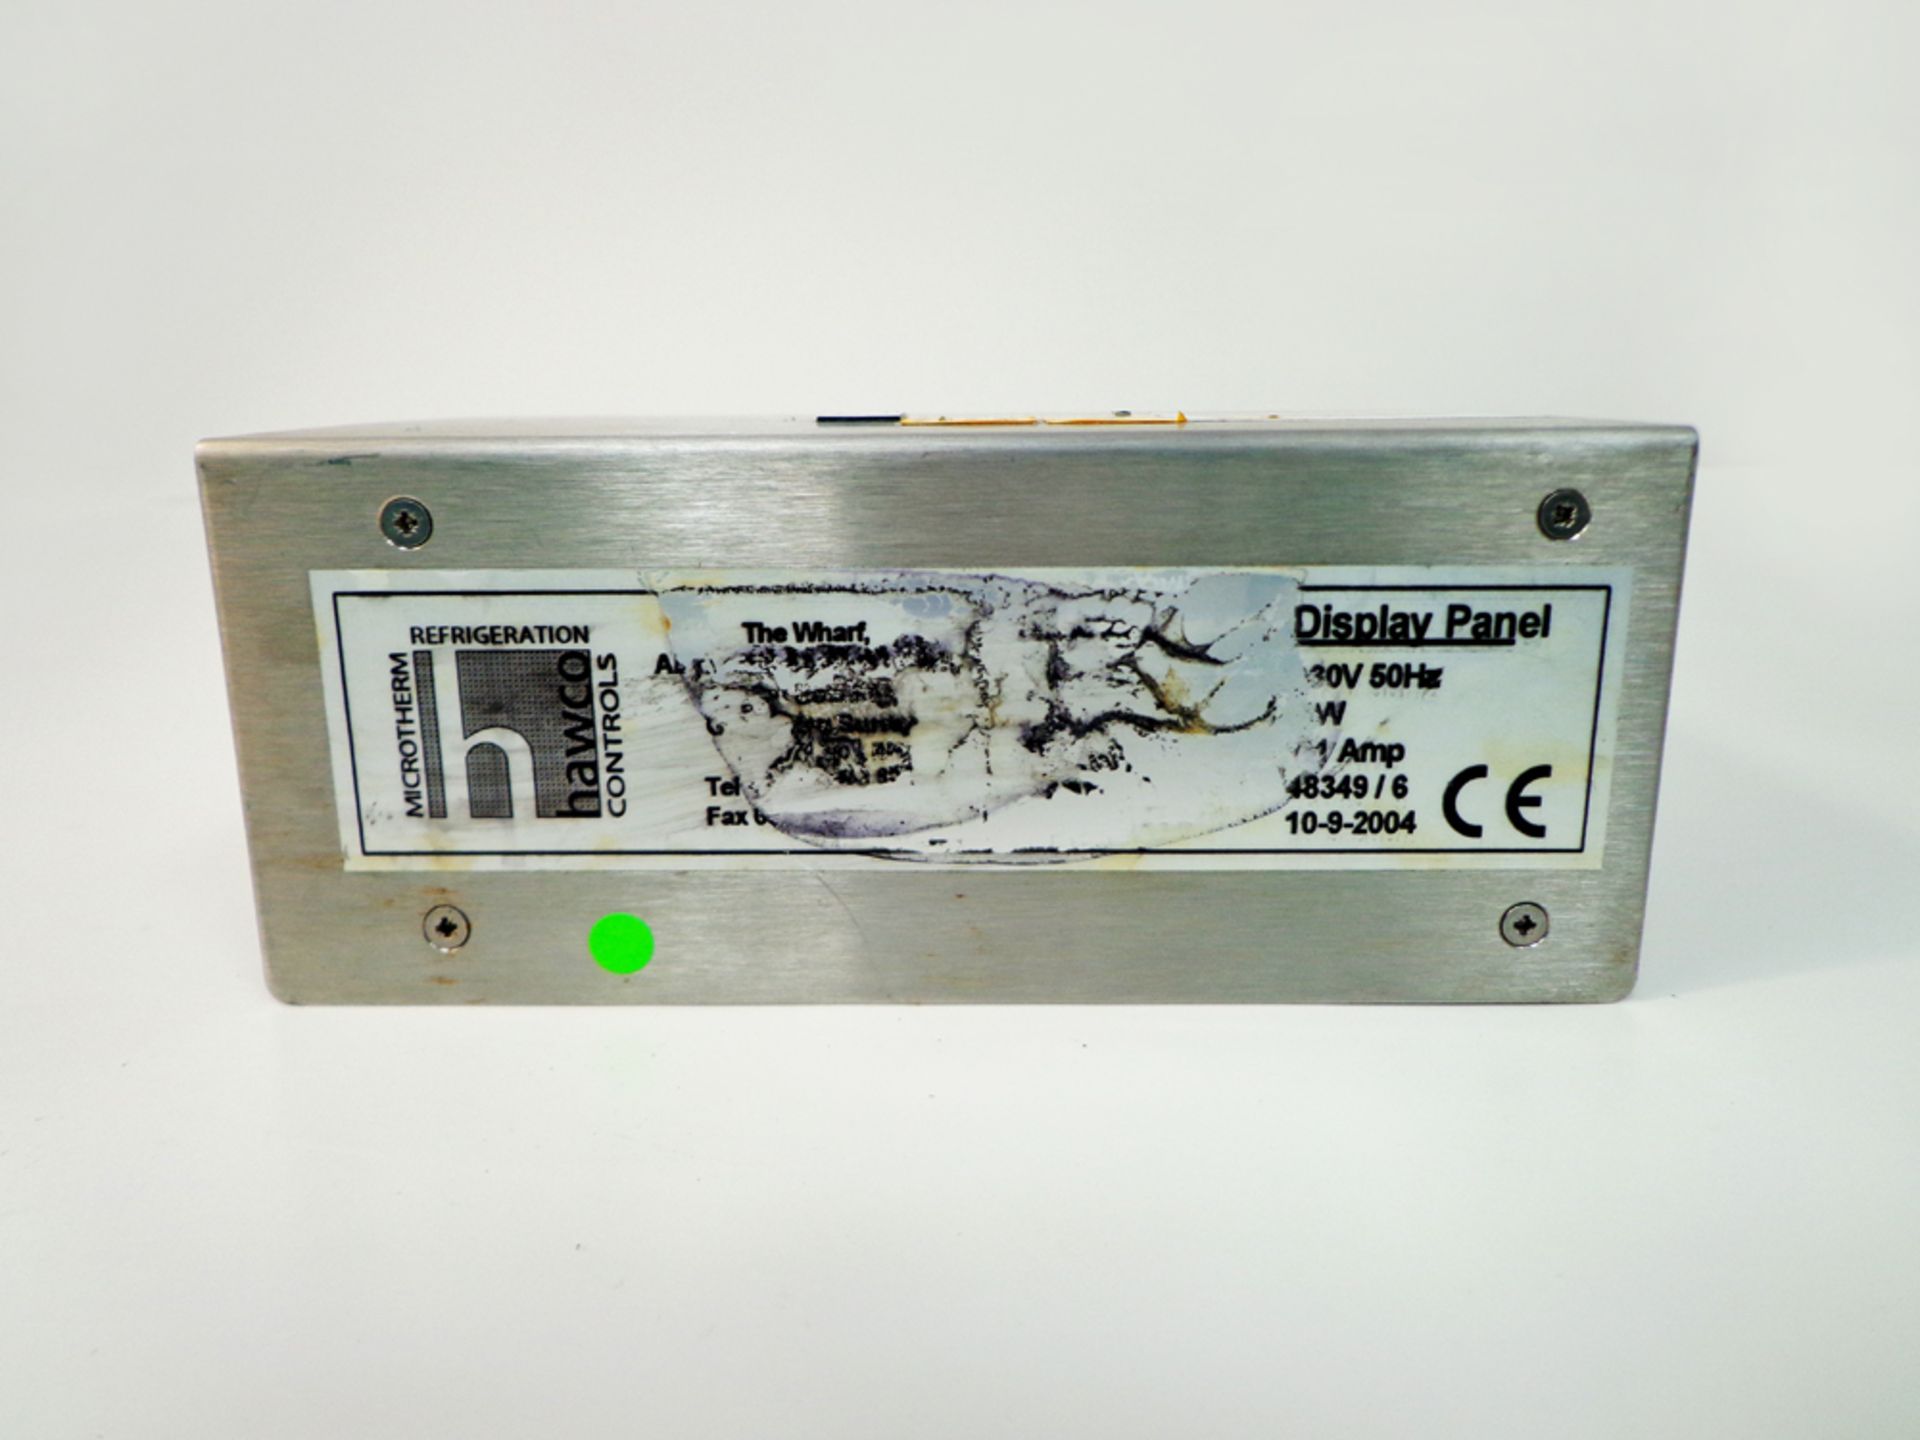 Hawco Temperature Display Panel - JUMO CL C8 Digital Indicator 701531, S/N 48349/6 - Image 4 of 5